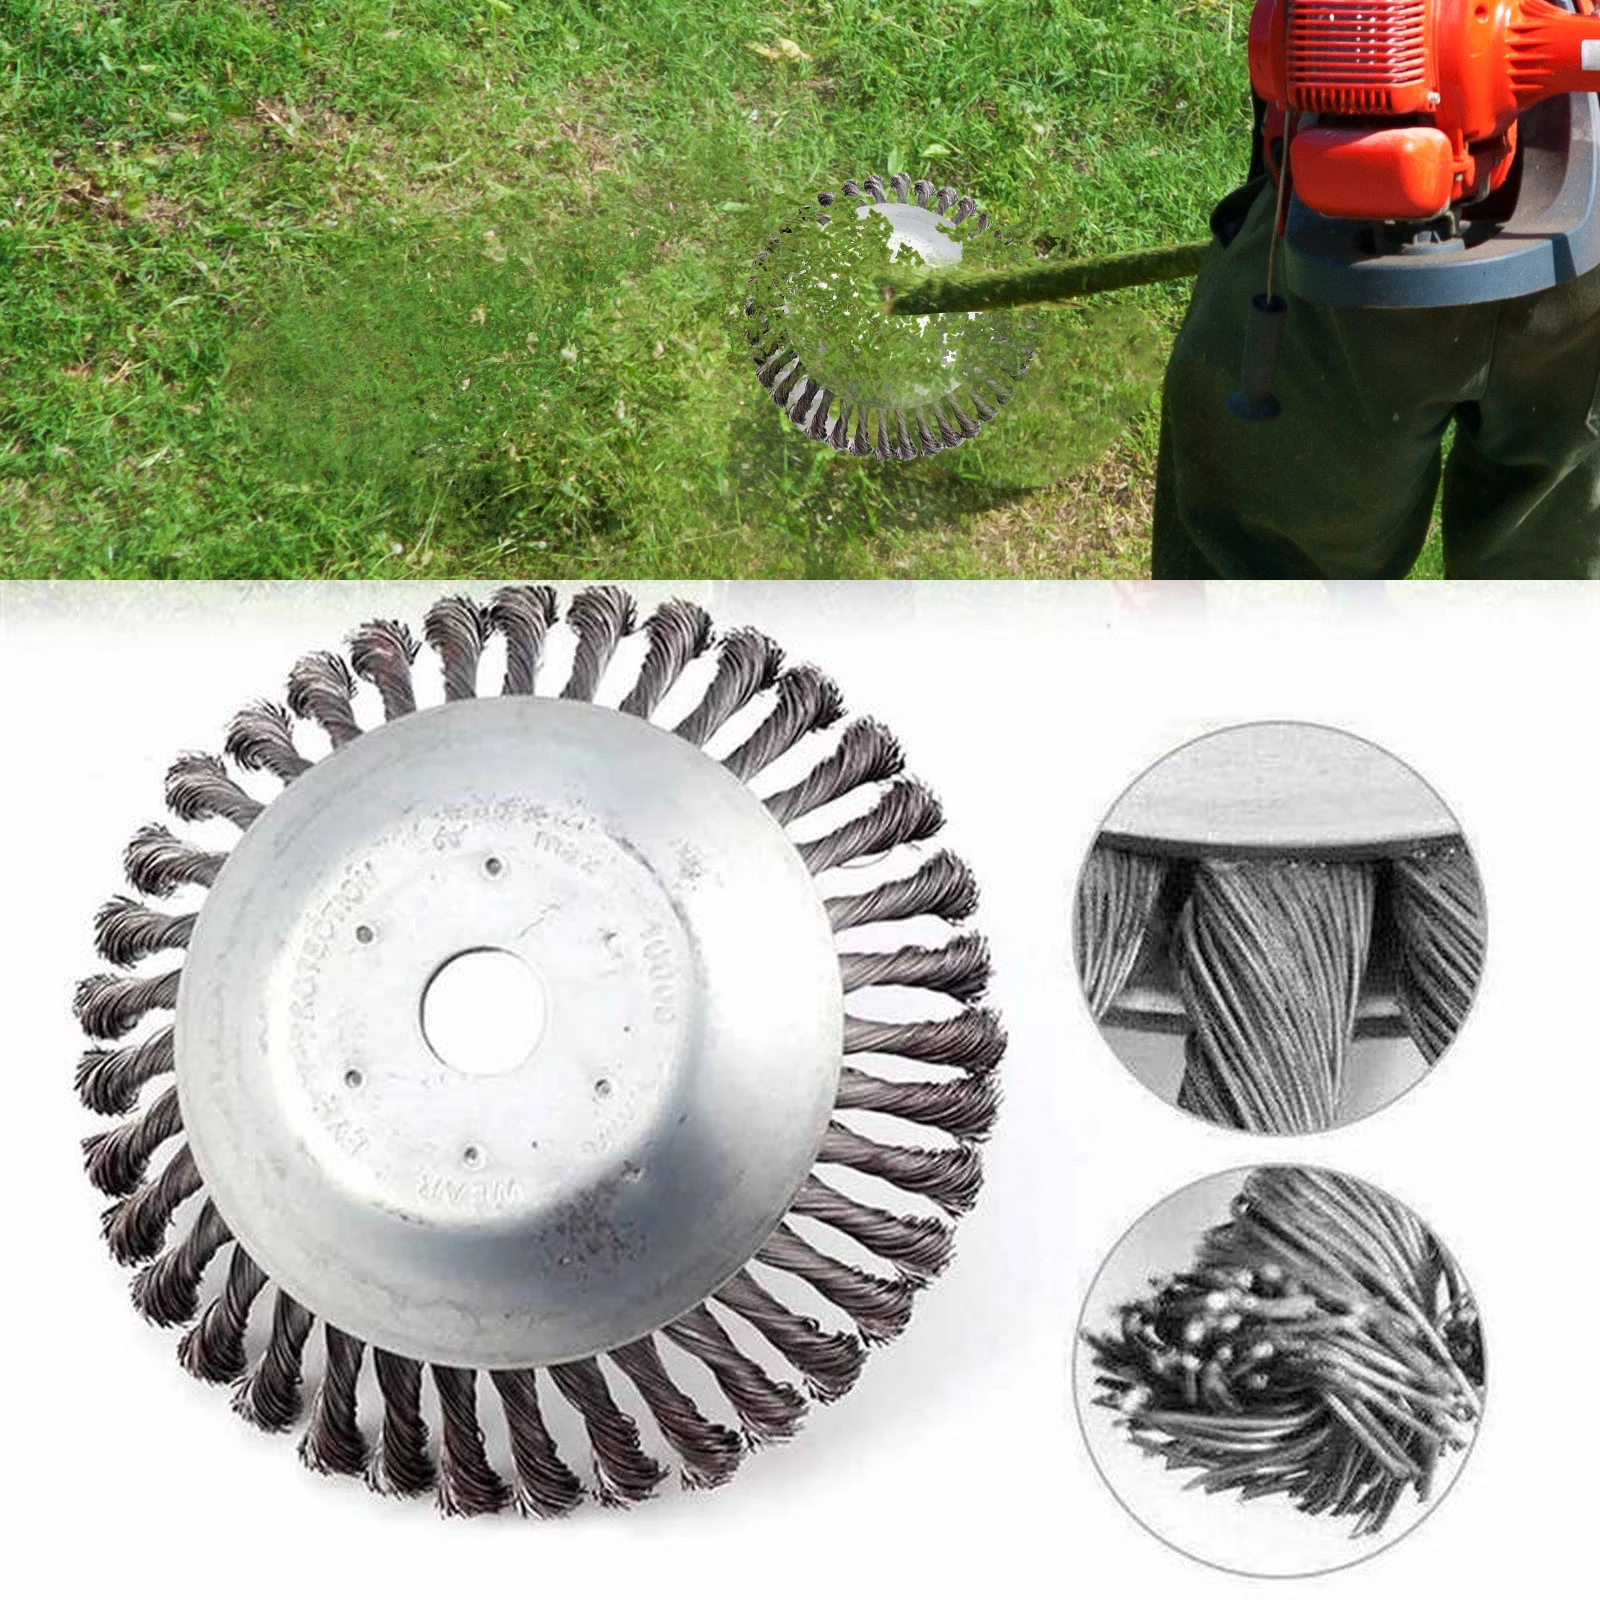 Garden Weed Brush Lawn Mower Mower Head 6 Inch Kink Wire Wheel General Replacement 